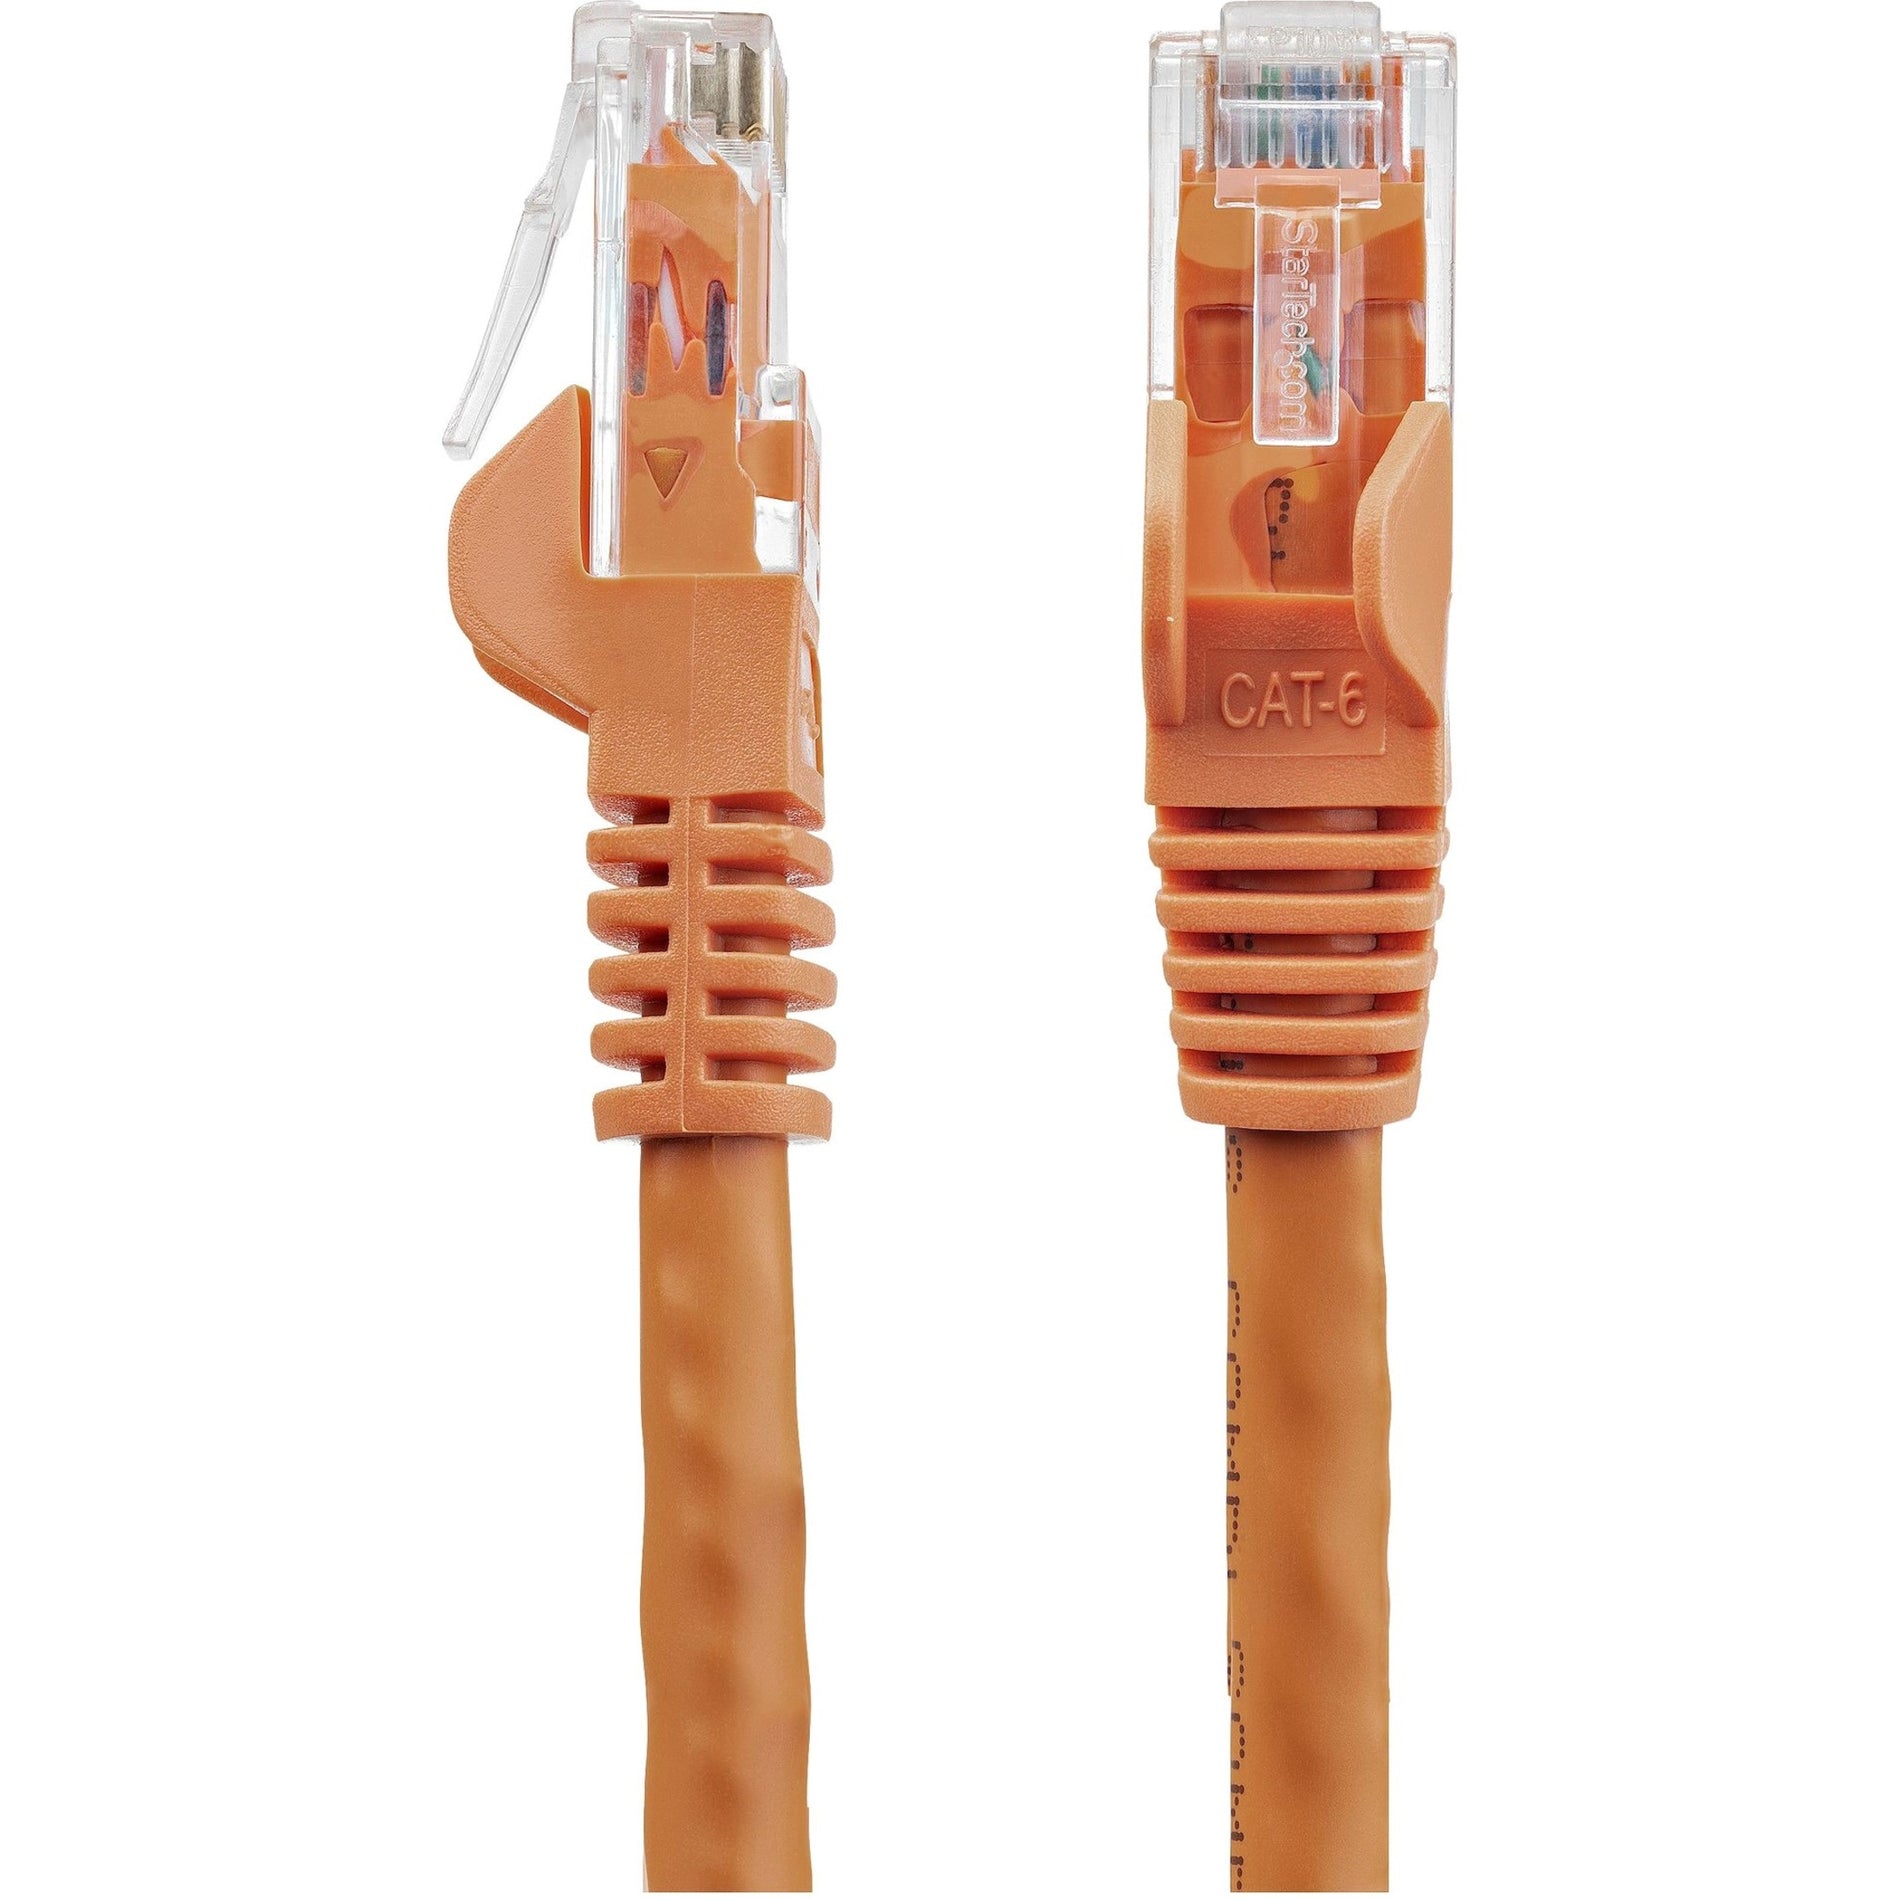 StarTech.com N6PATCH5OR Cat6 Patch Cable, 5ft Orange Ethernet Cable, Snagless RJ45 Connectors